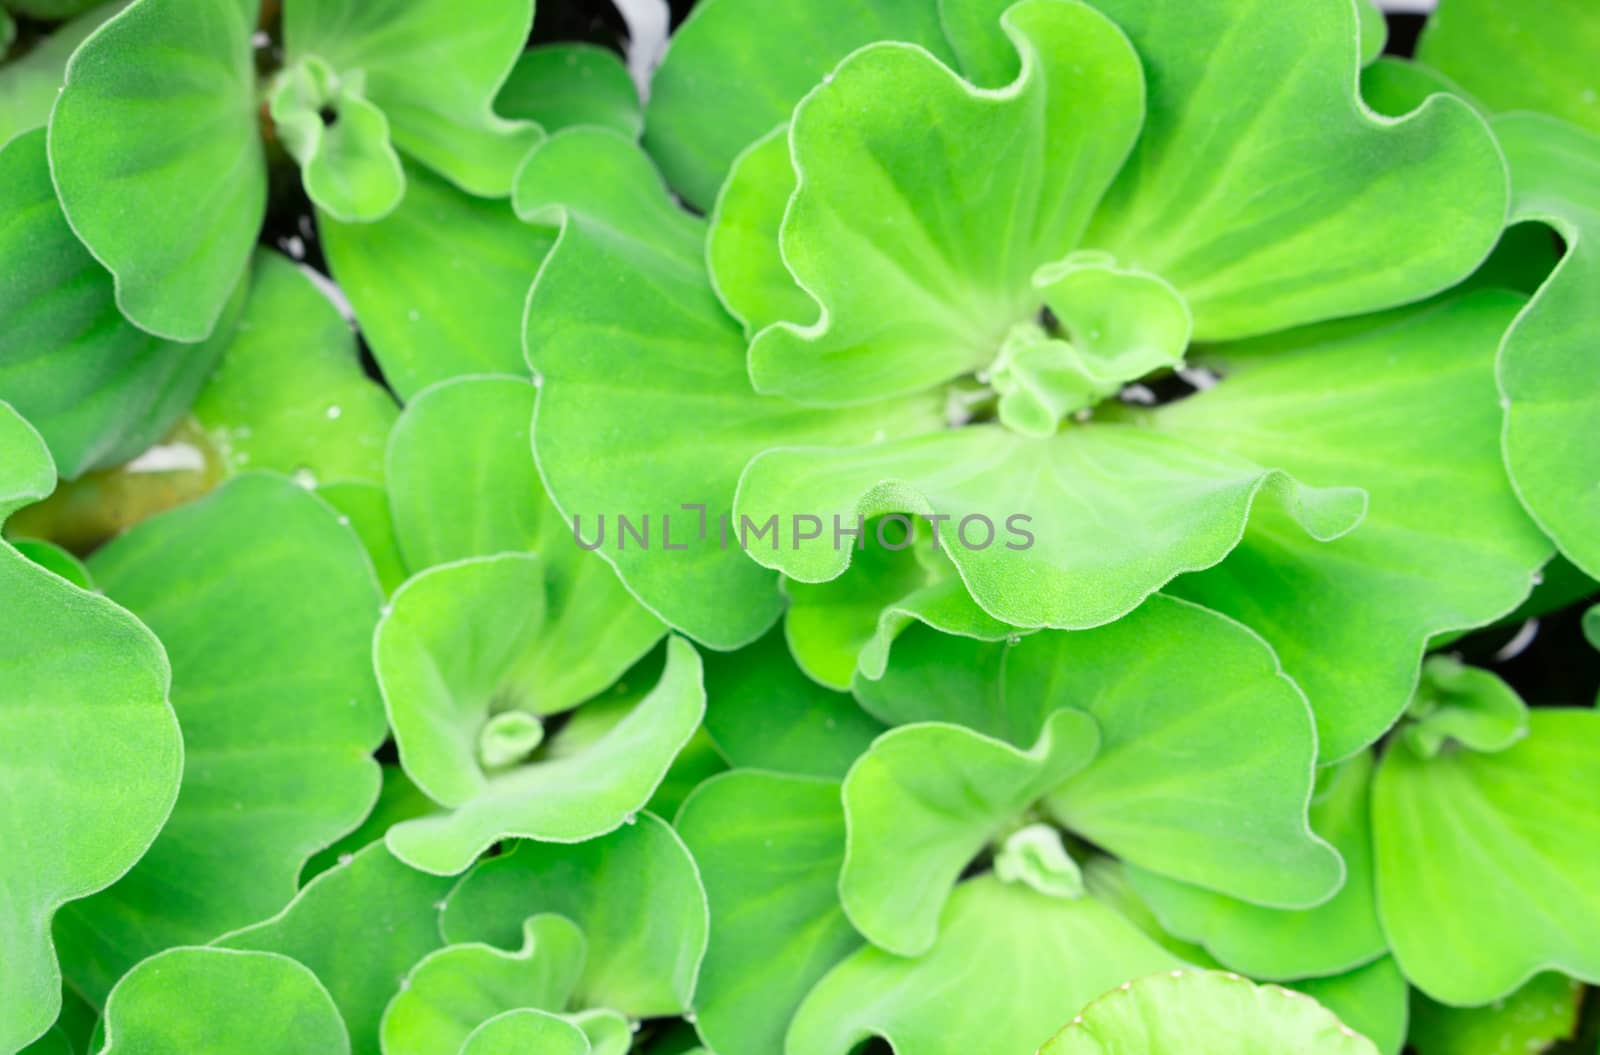 Closeup green duckweed natural background texture, selective focus